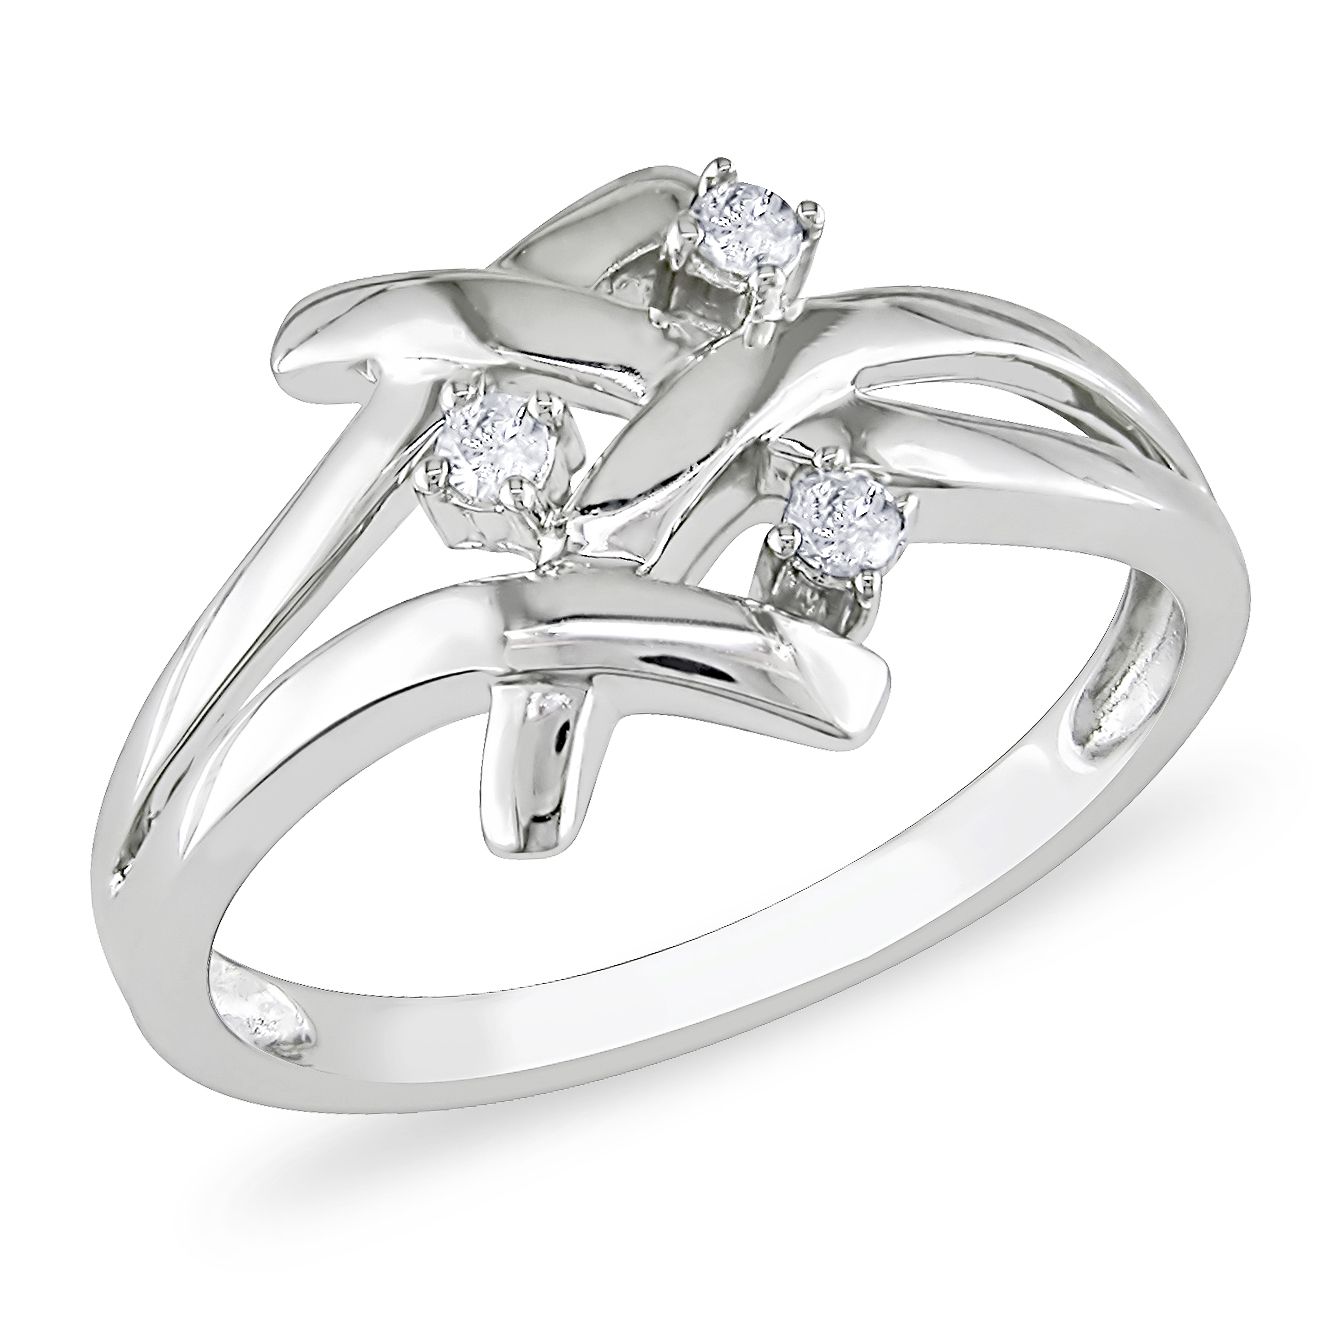 1/10 CTTW Diamond Fashion Ring Set in 10K White Gold (GH I2;I3)